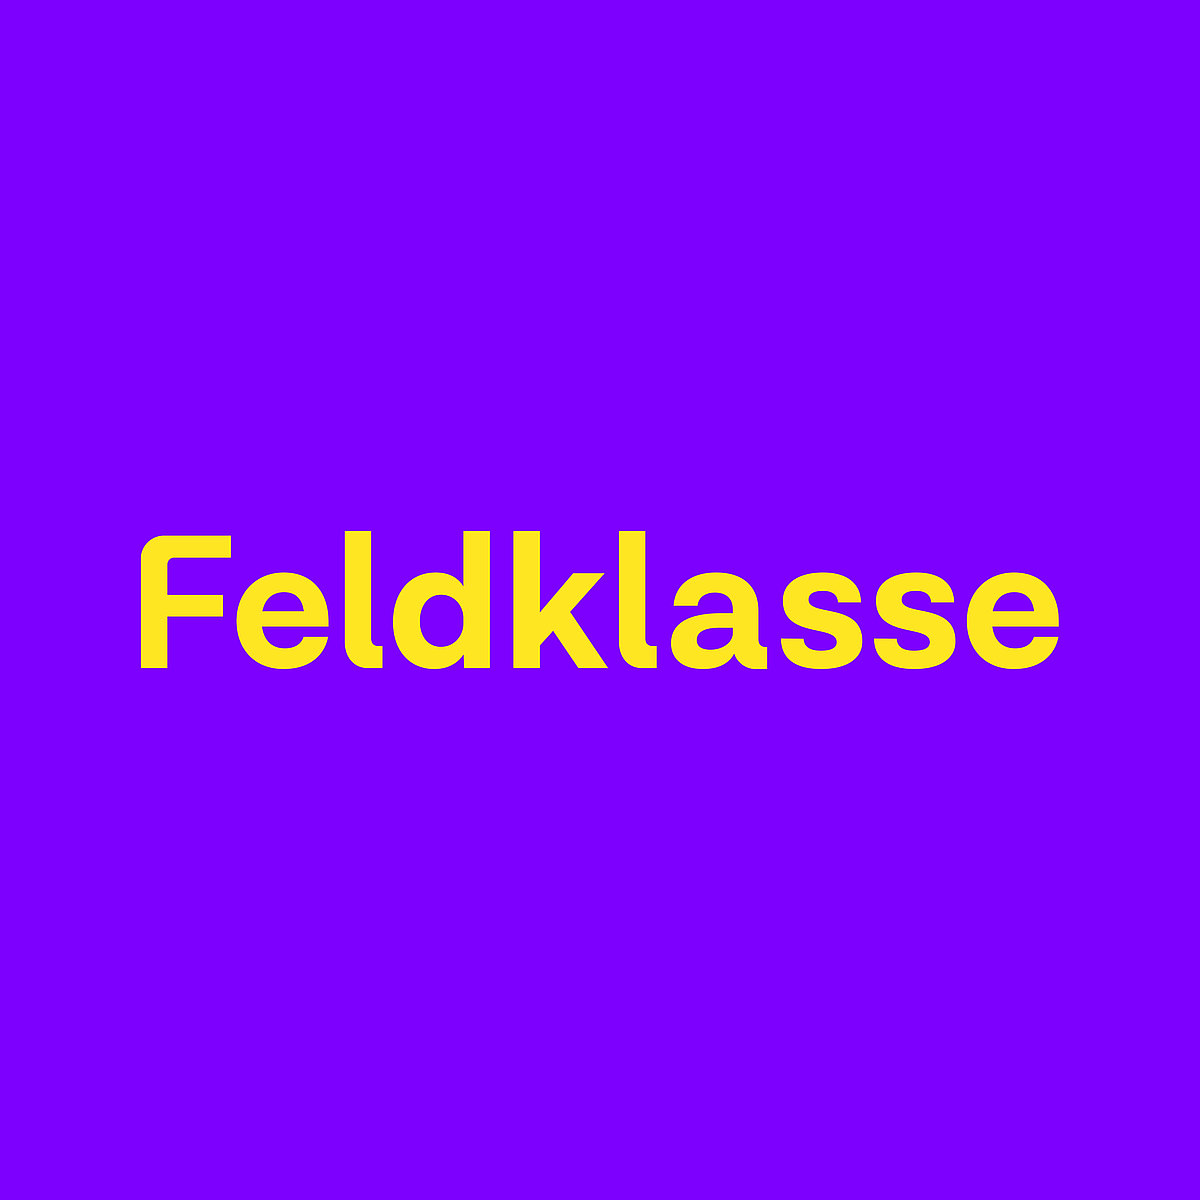 Yellow Feldklasse logo on a violet background